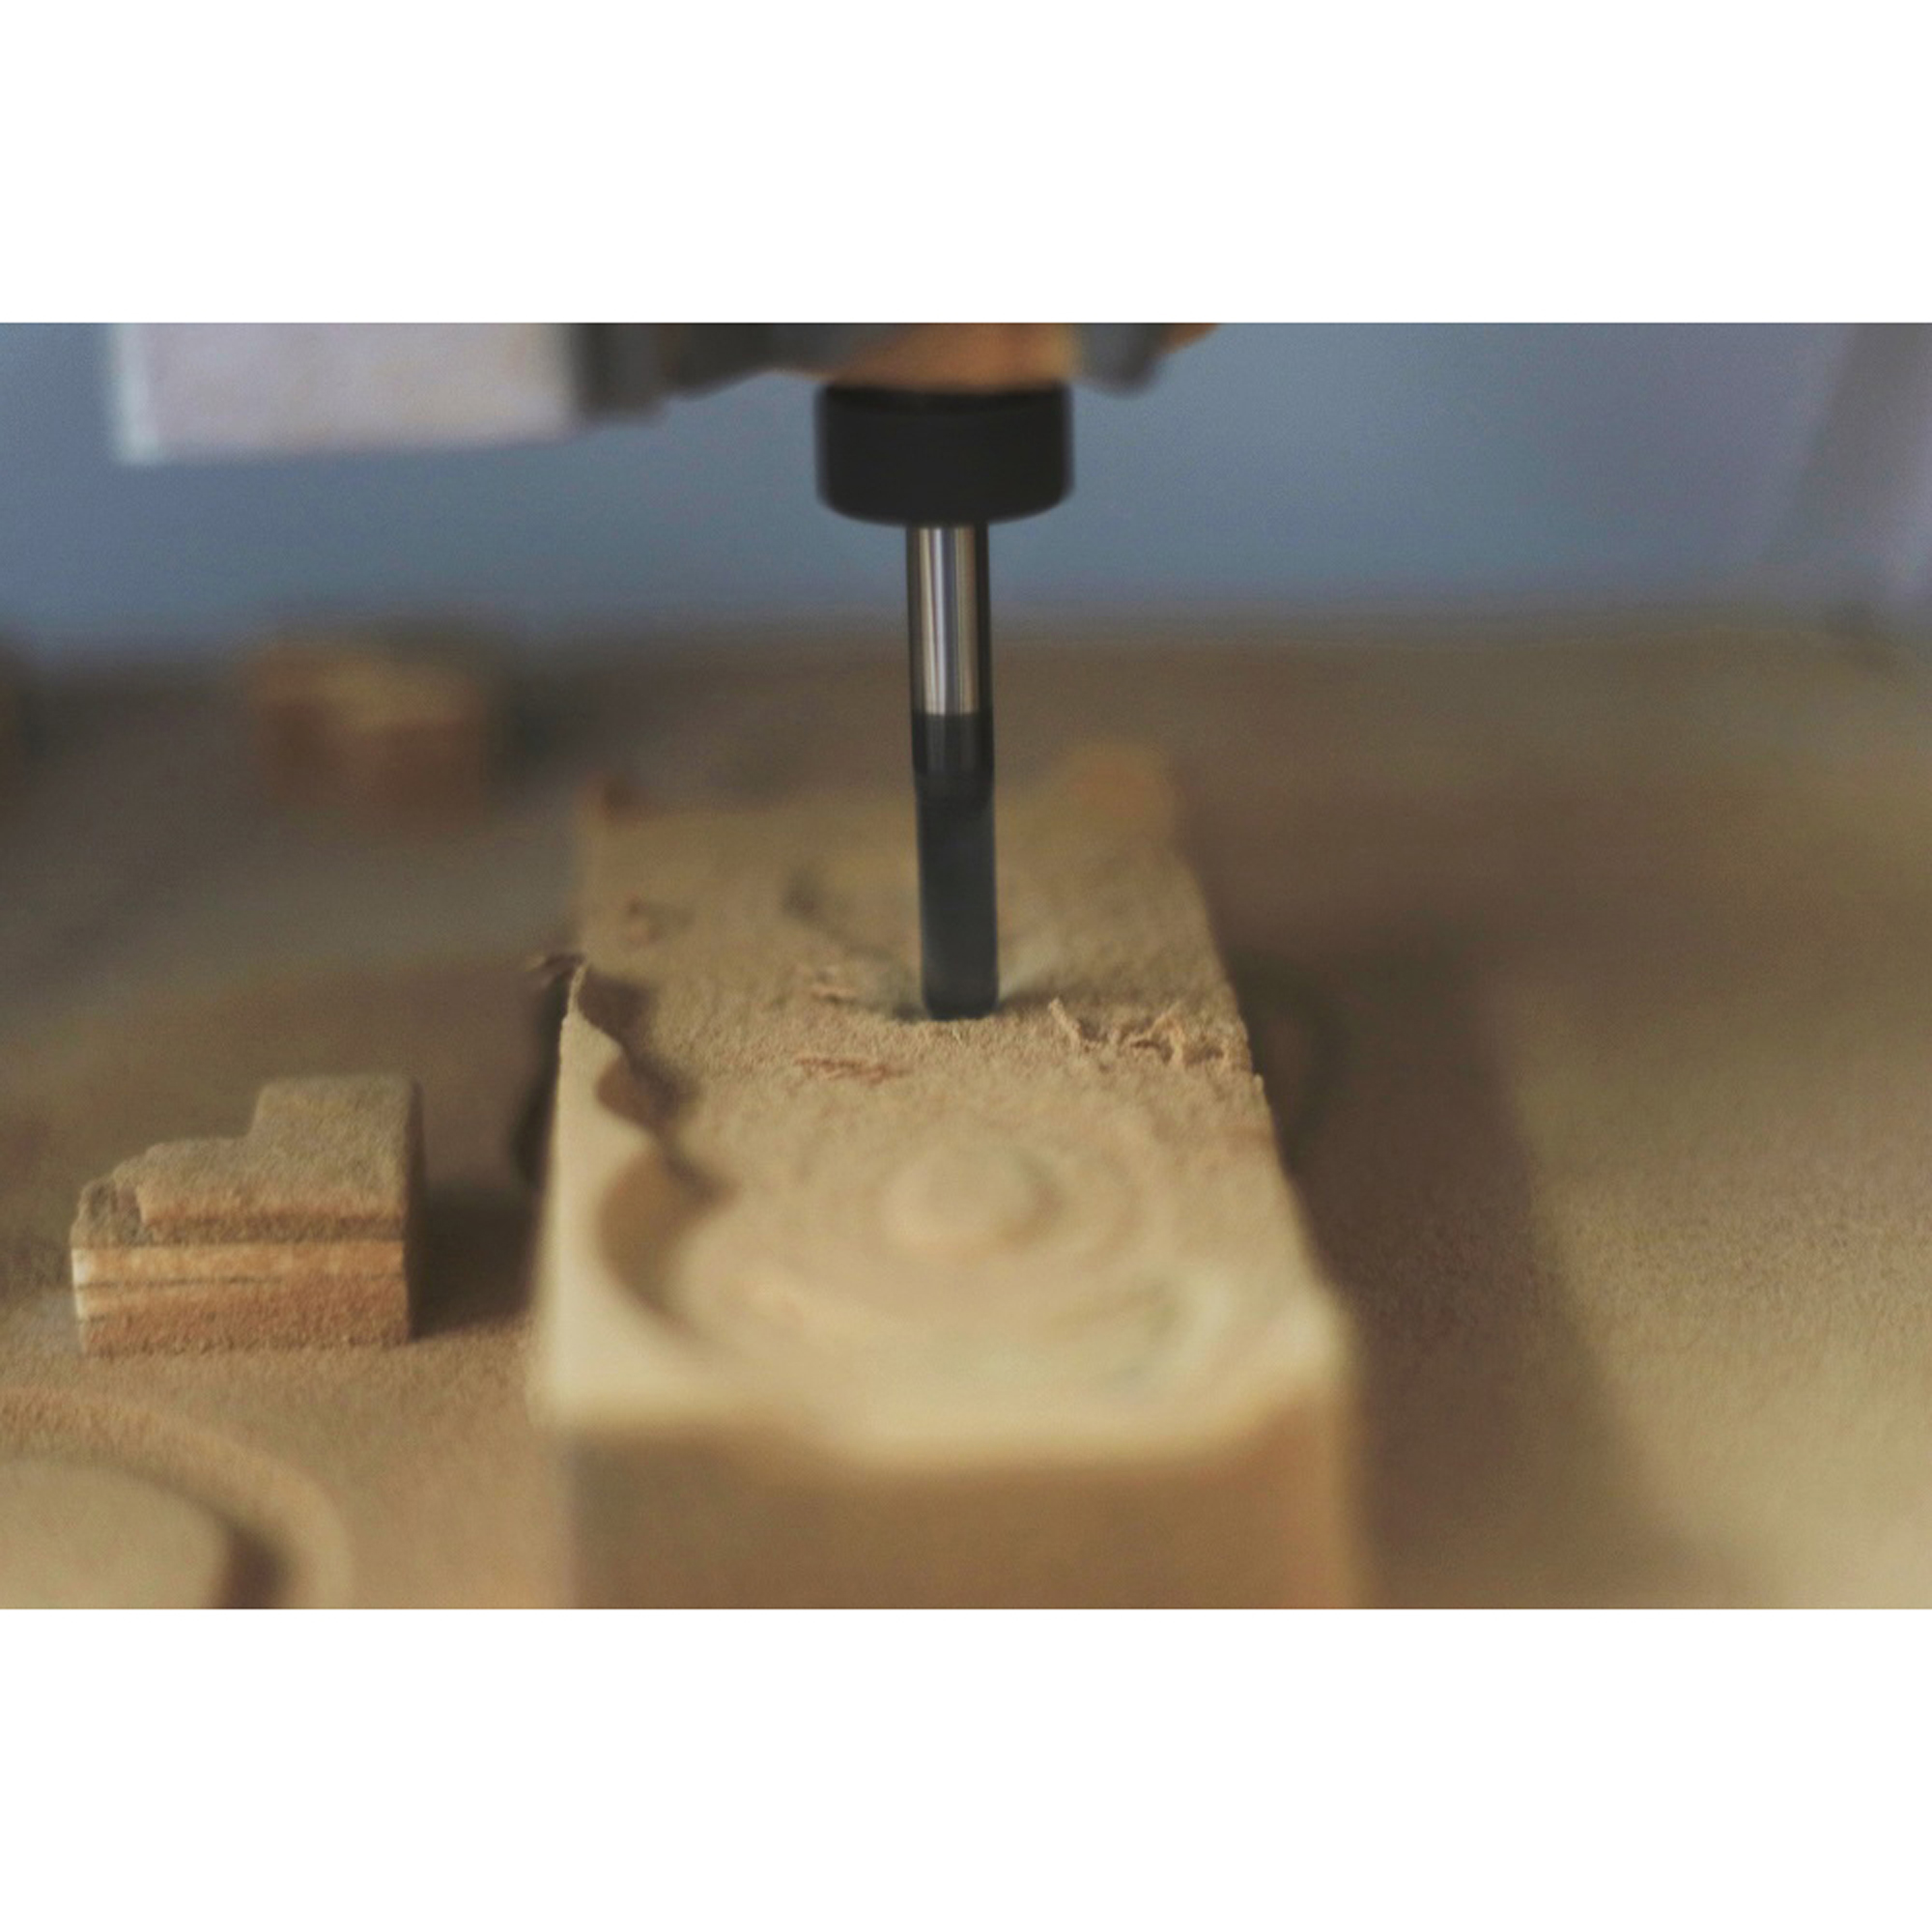 CNC cutting customized grips